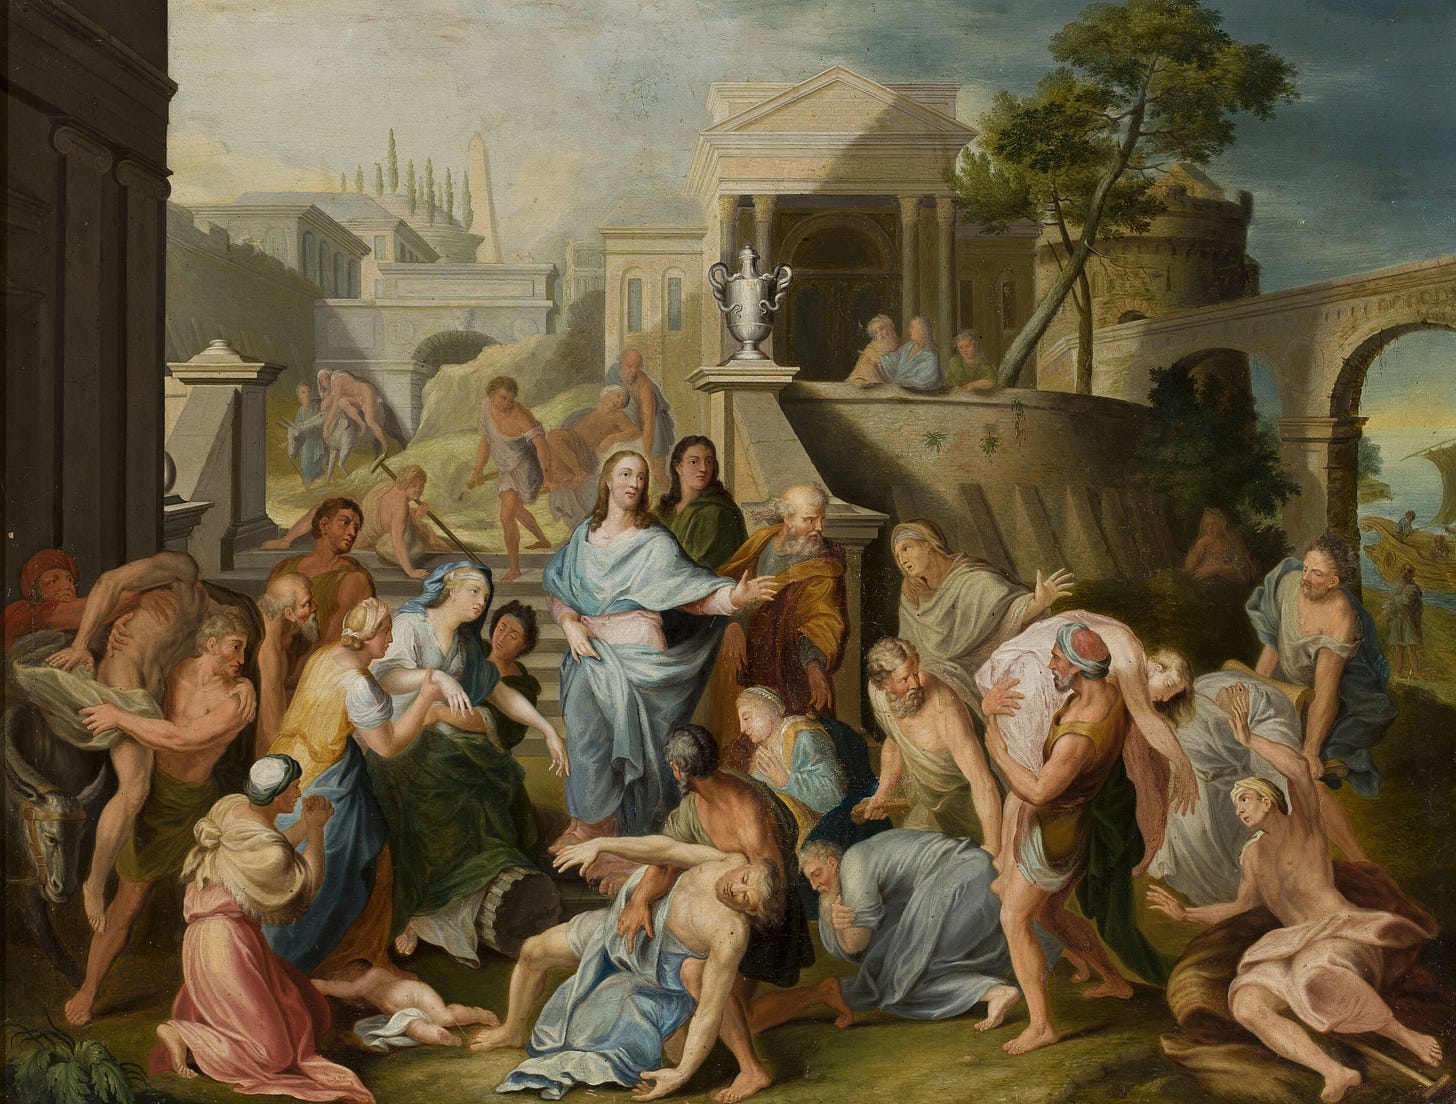 Christ healing the sick by Follower of Jean-Baptiste Jouvenet